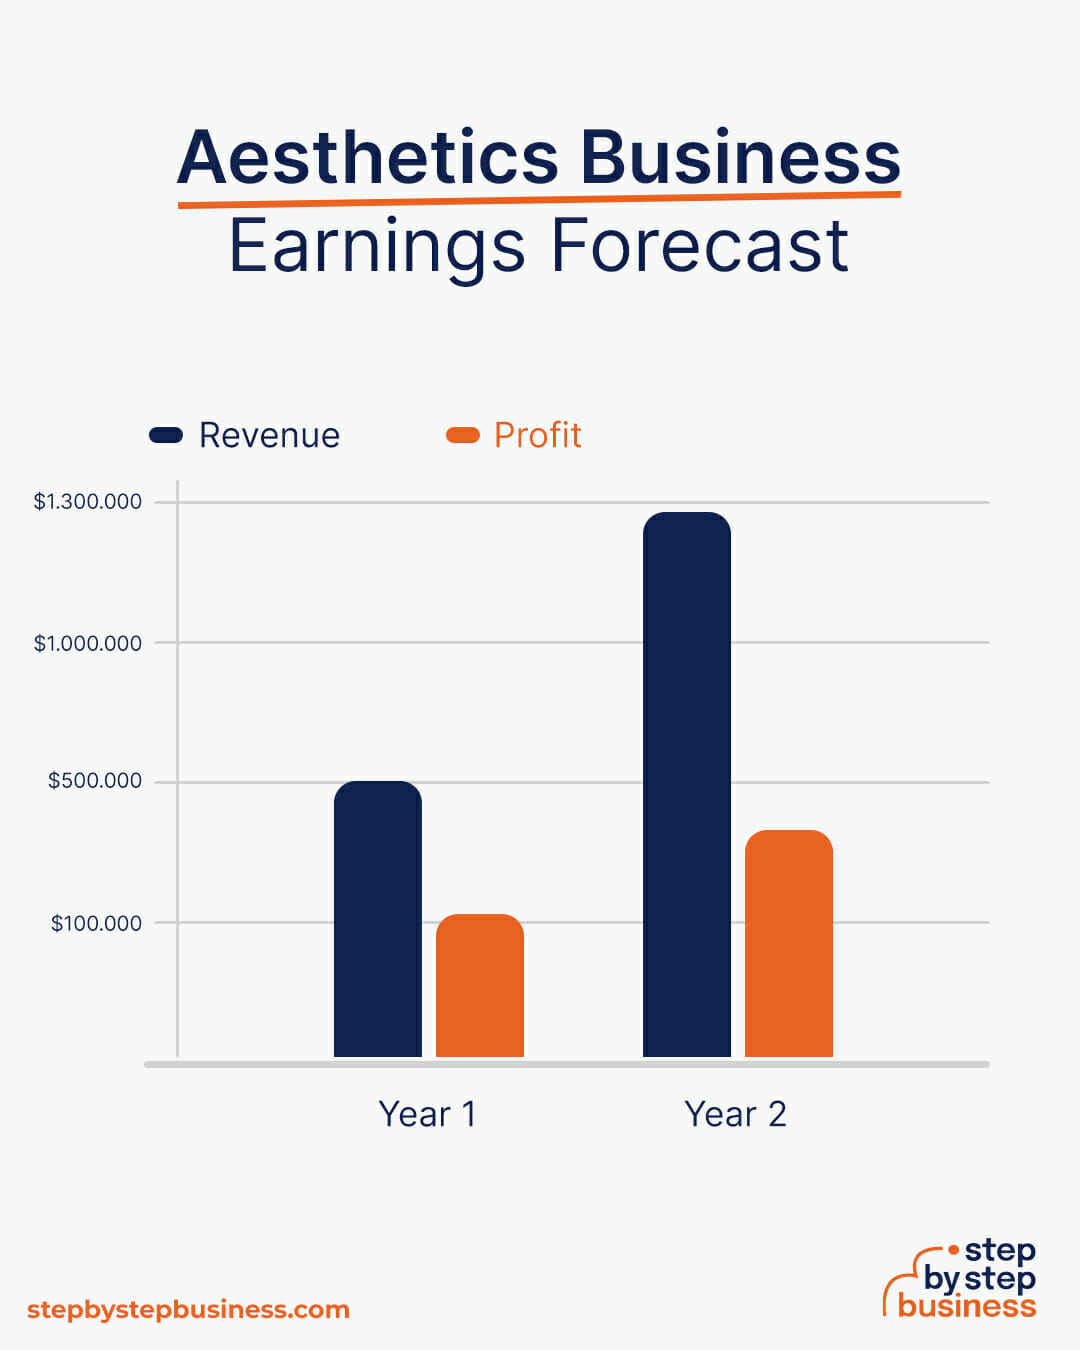 Aesthetics Business earning forecast